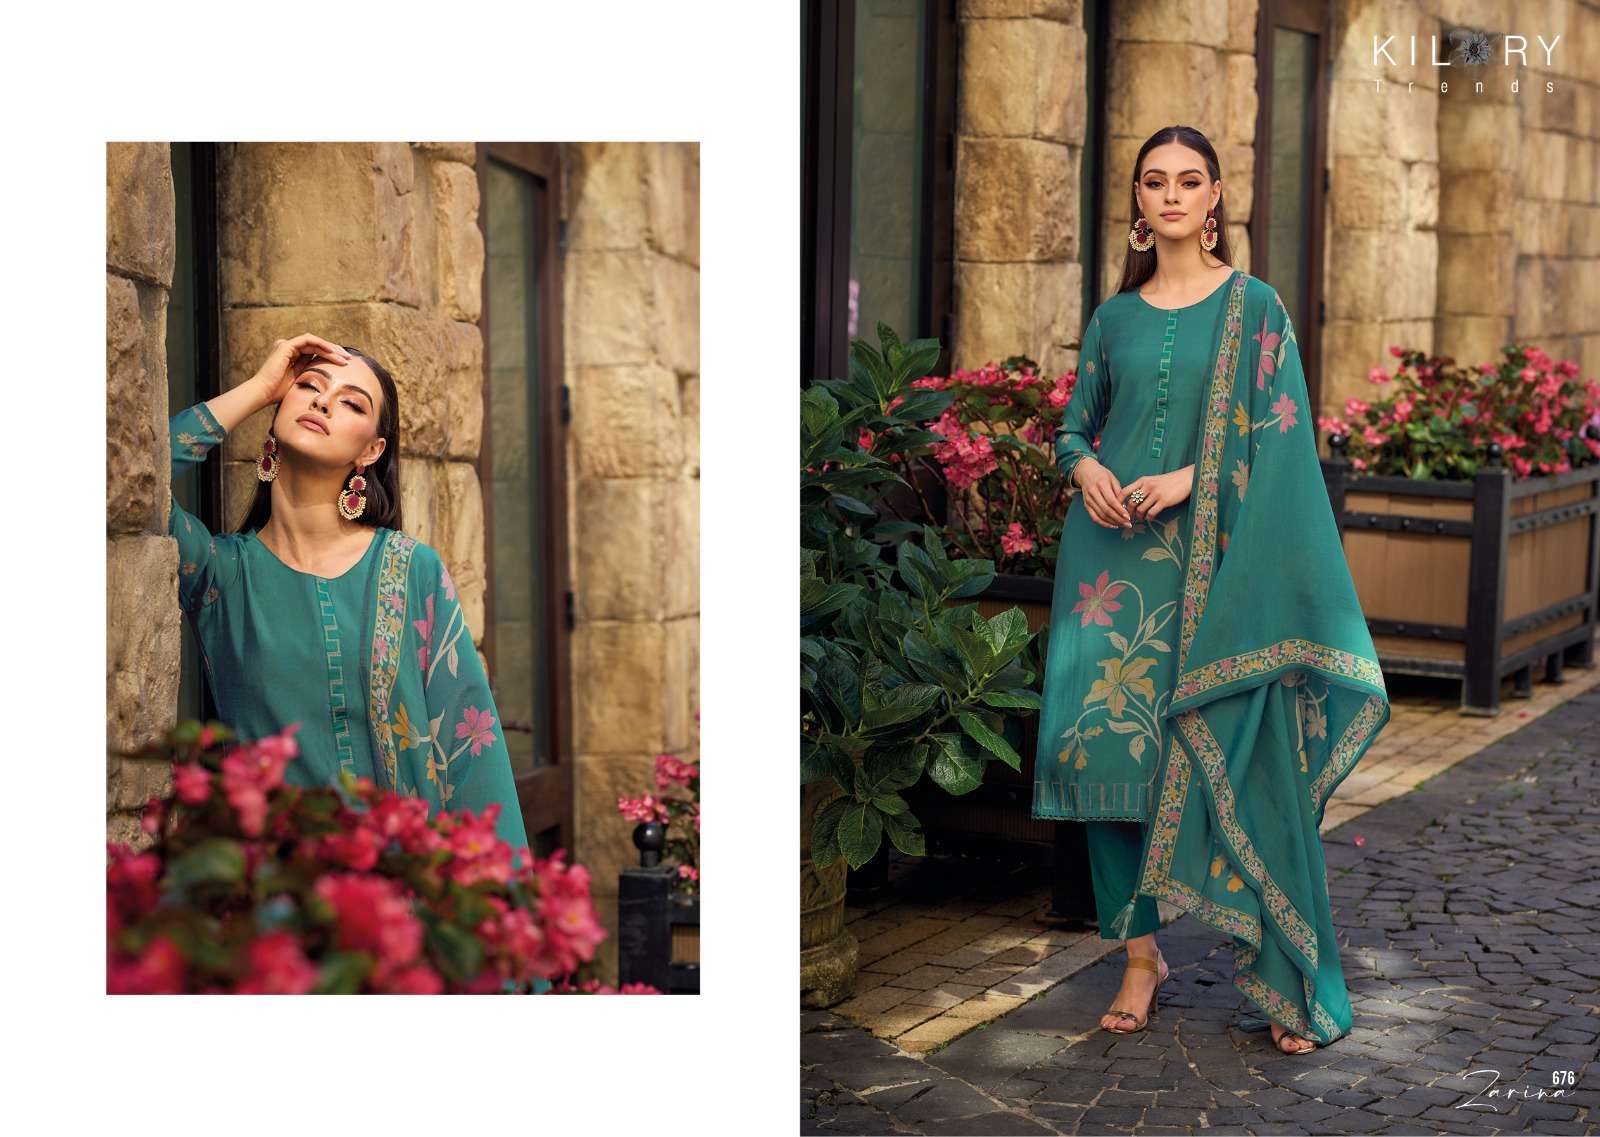 Zarina Buy Kilory Trendz Online Wholesaler Latest Collection Unstitched Salwar Suit